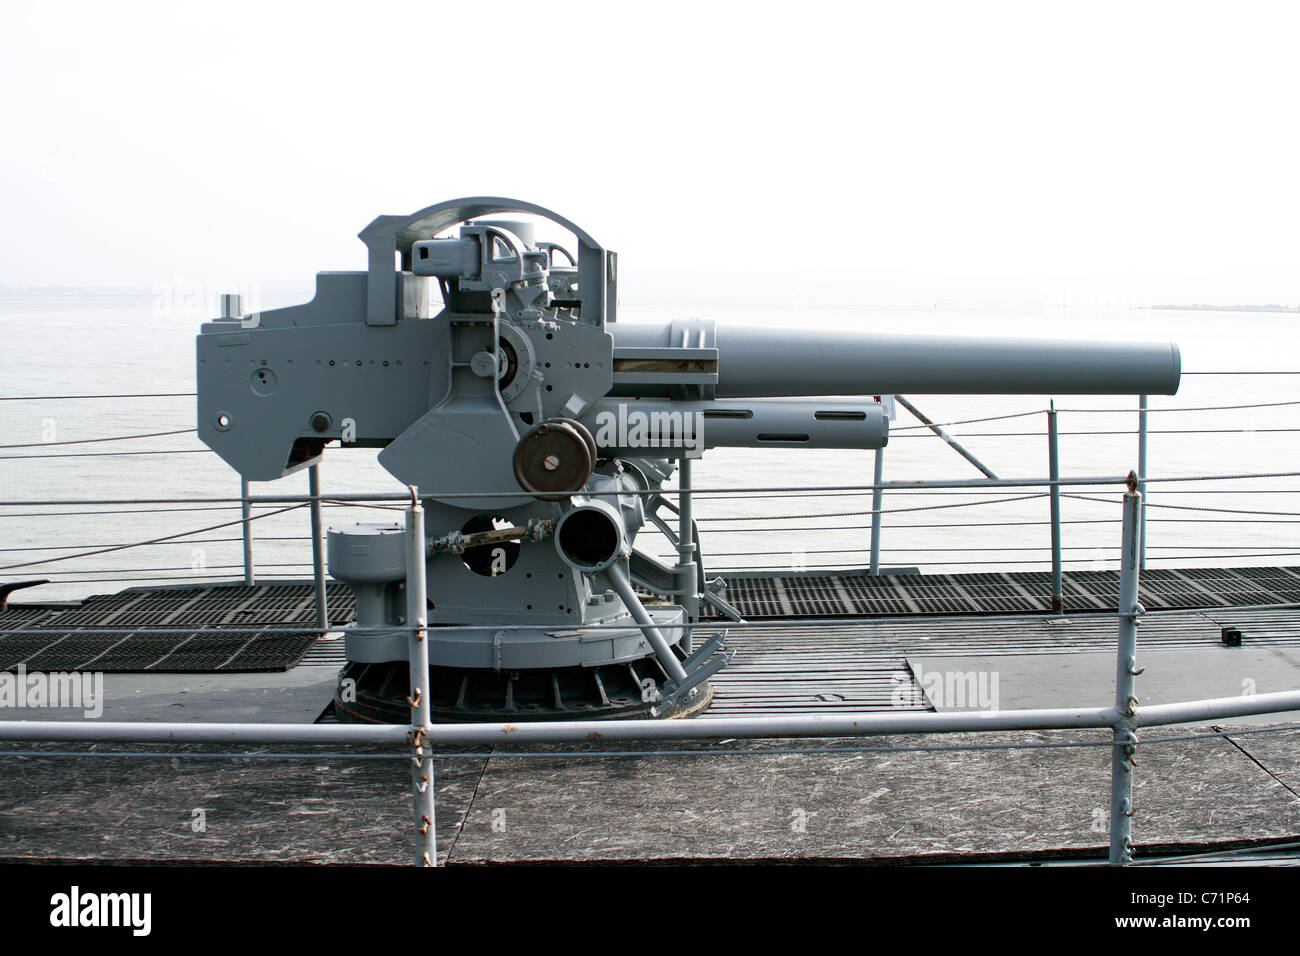 5 inch deck gun San Francisco - Fisherman's Wharf. USS Pampanito World War II submarine. length 311'9', width 27'3', displacemen Stock Photo